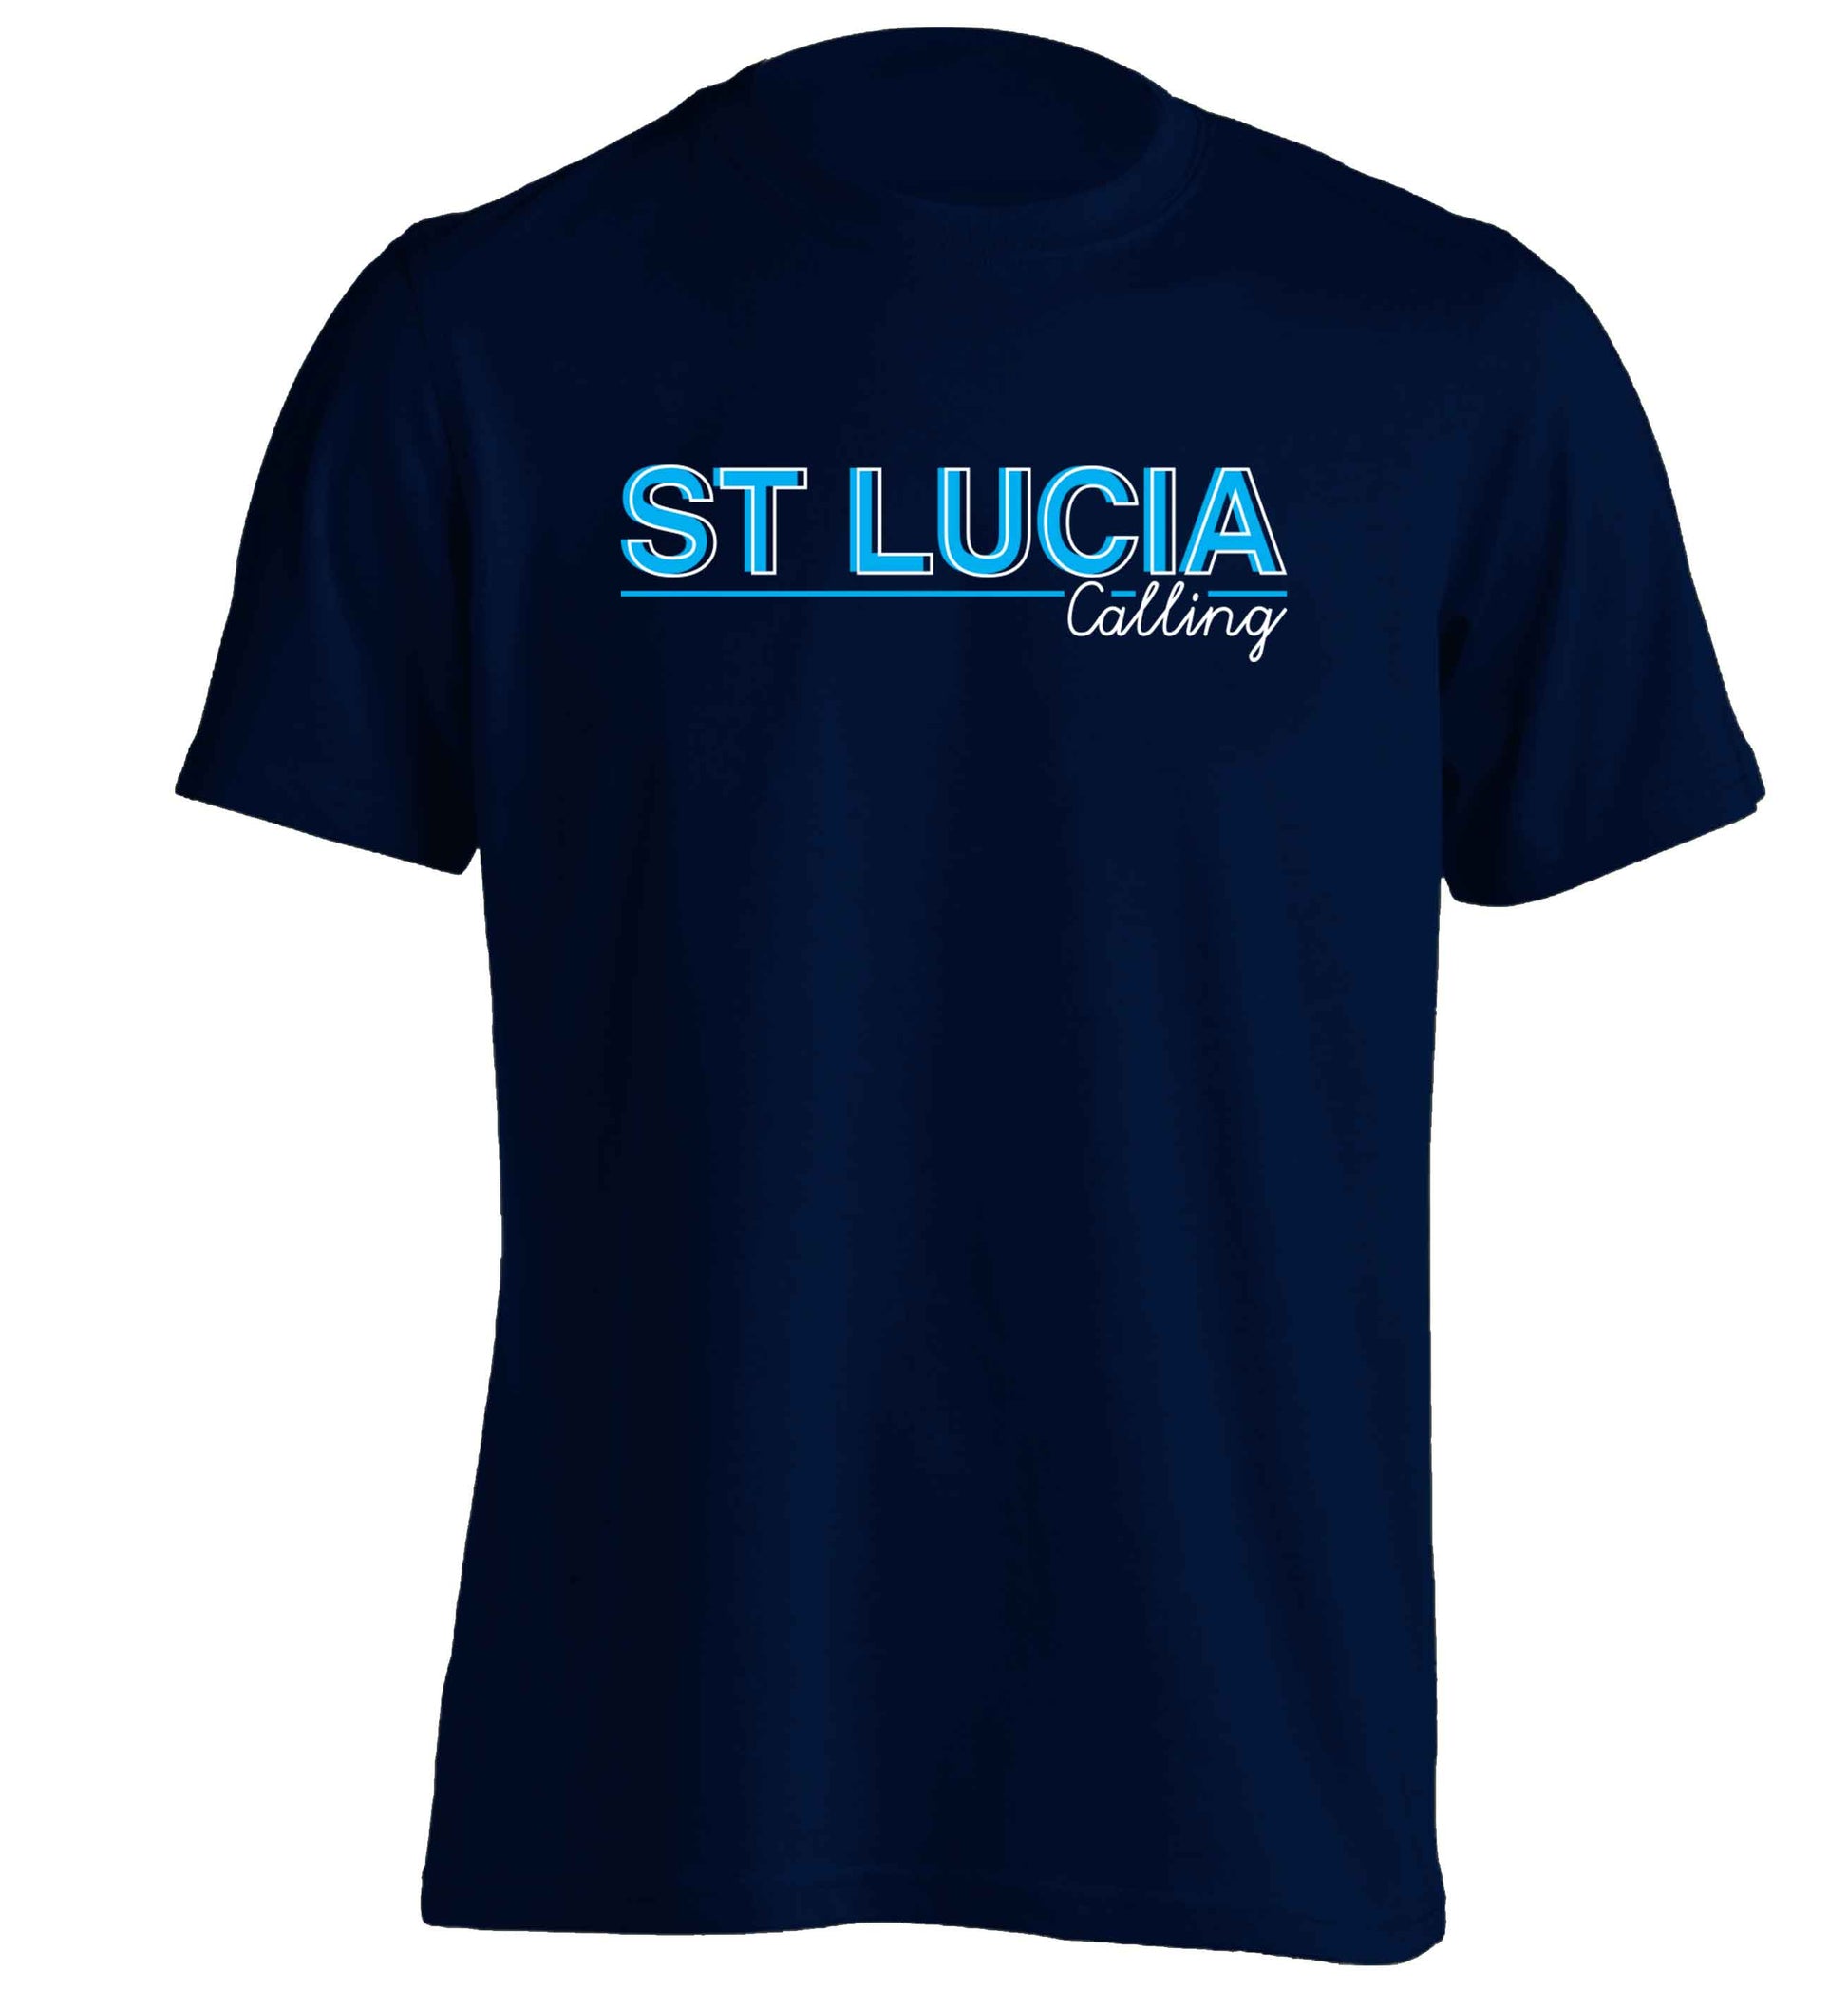 St Lucia calling adults unisex navy Tshirt 2XL